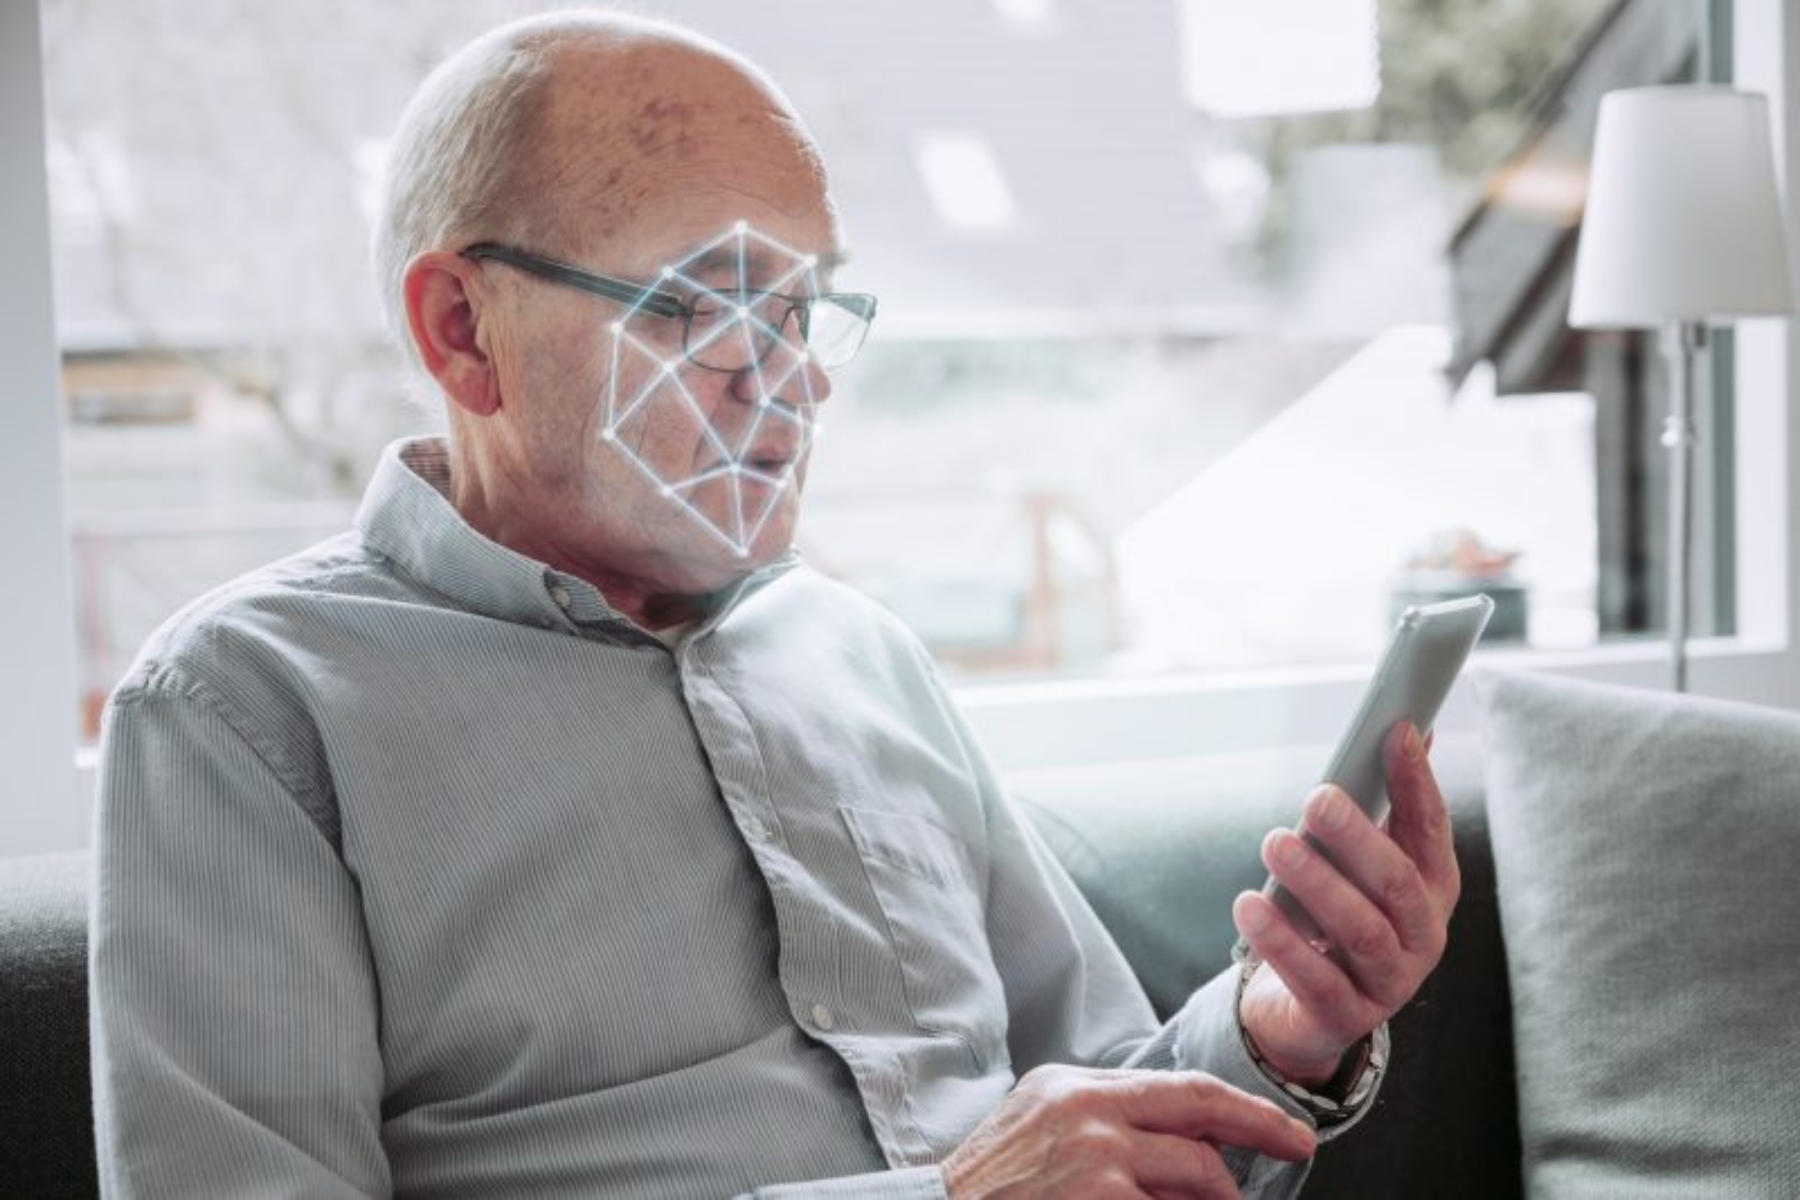 AI ηλικιωμένοι ΠΟΥ: Η τεχνητή νοημοσύνη προς όφελος της υγείας των ηλικιωμένων